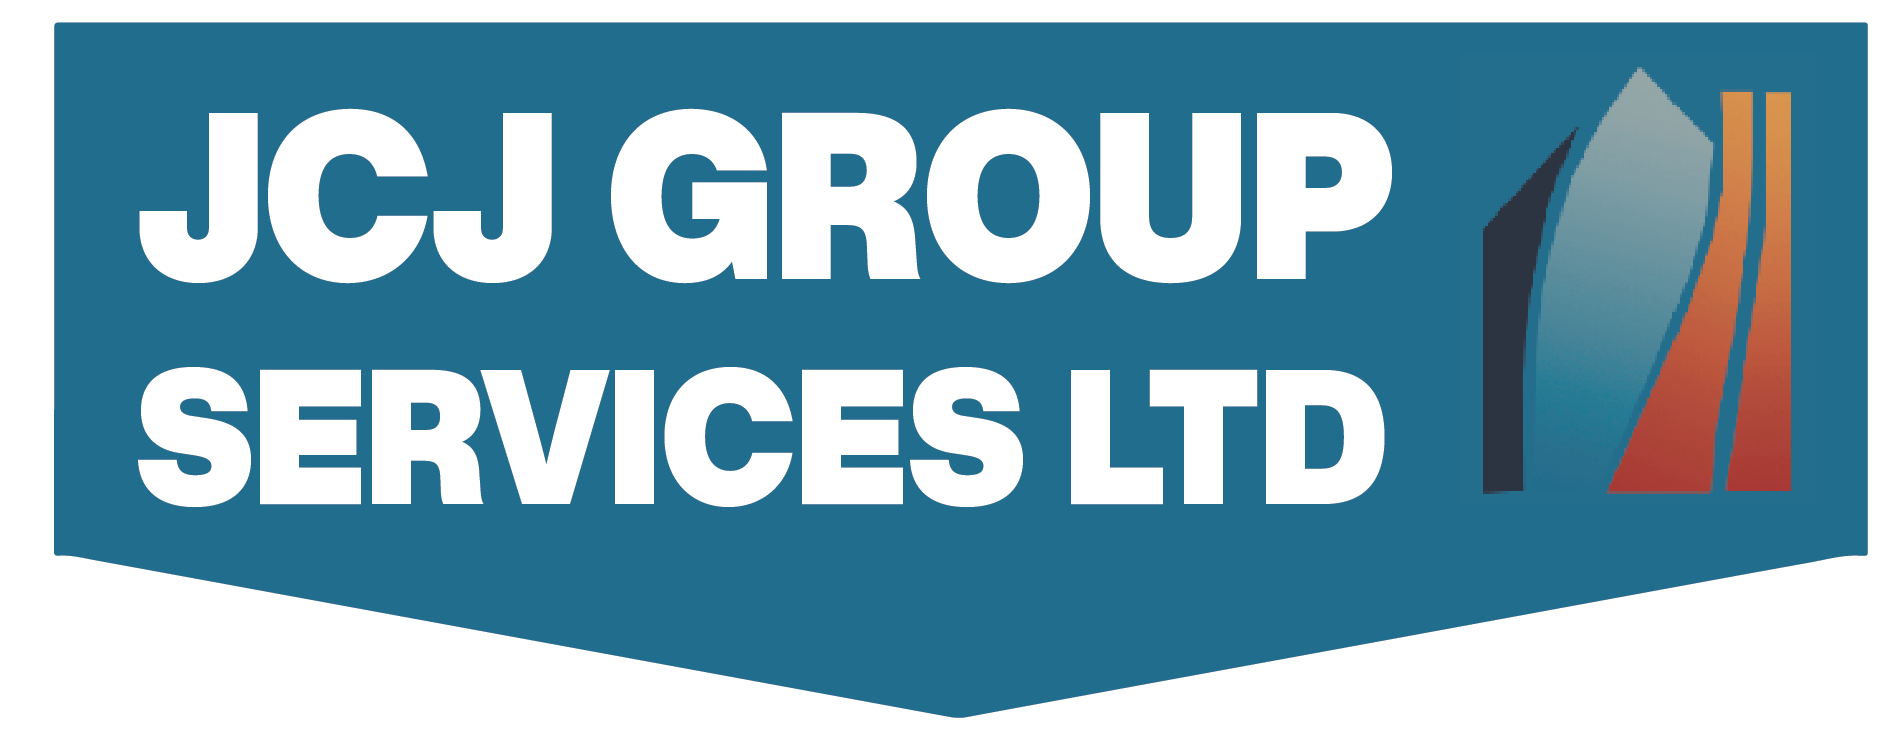 JCJ Group services ltd